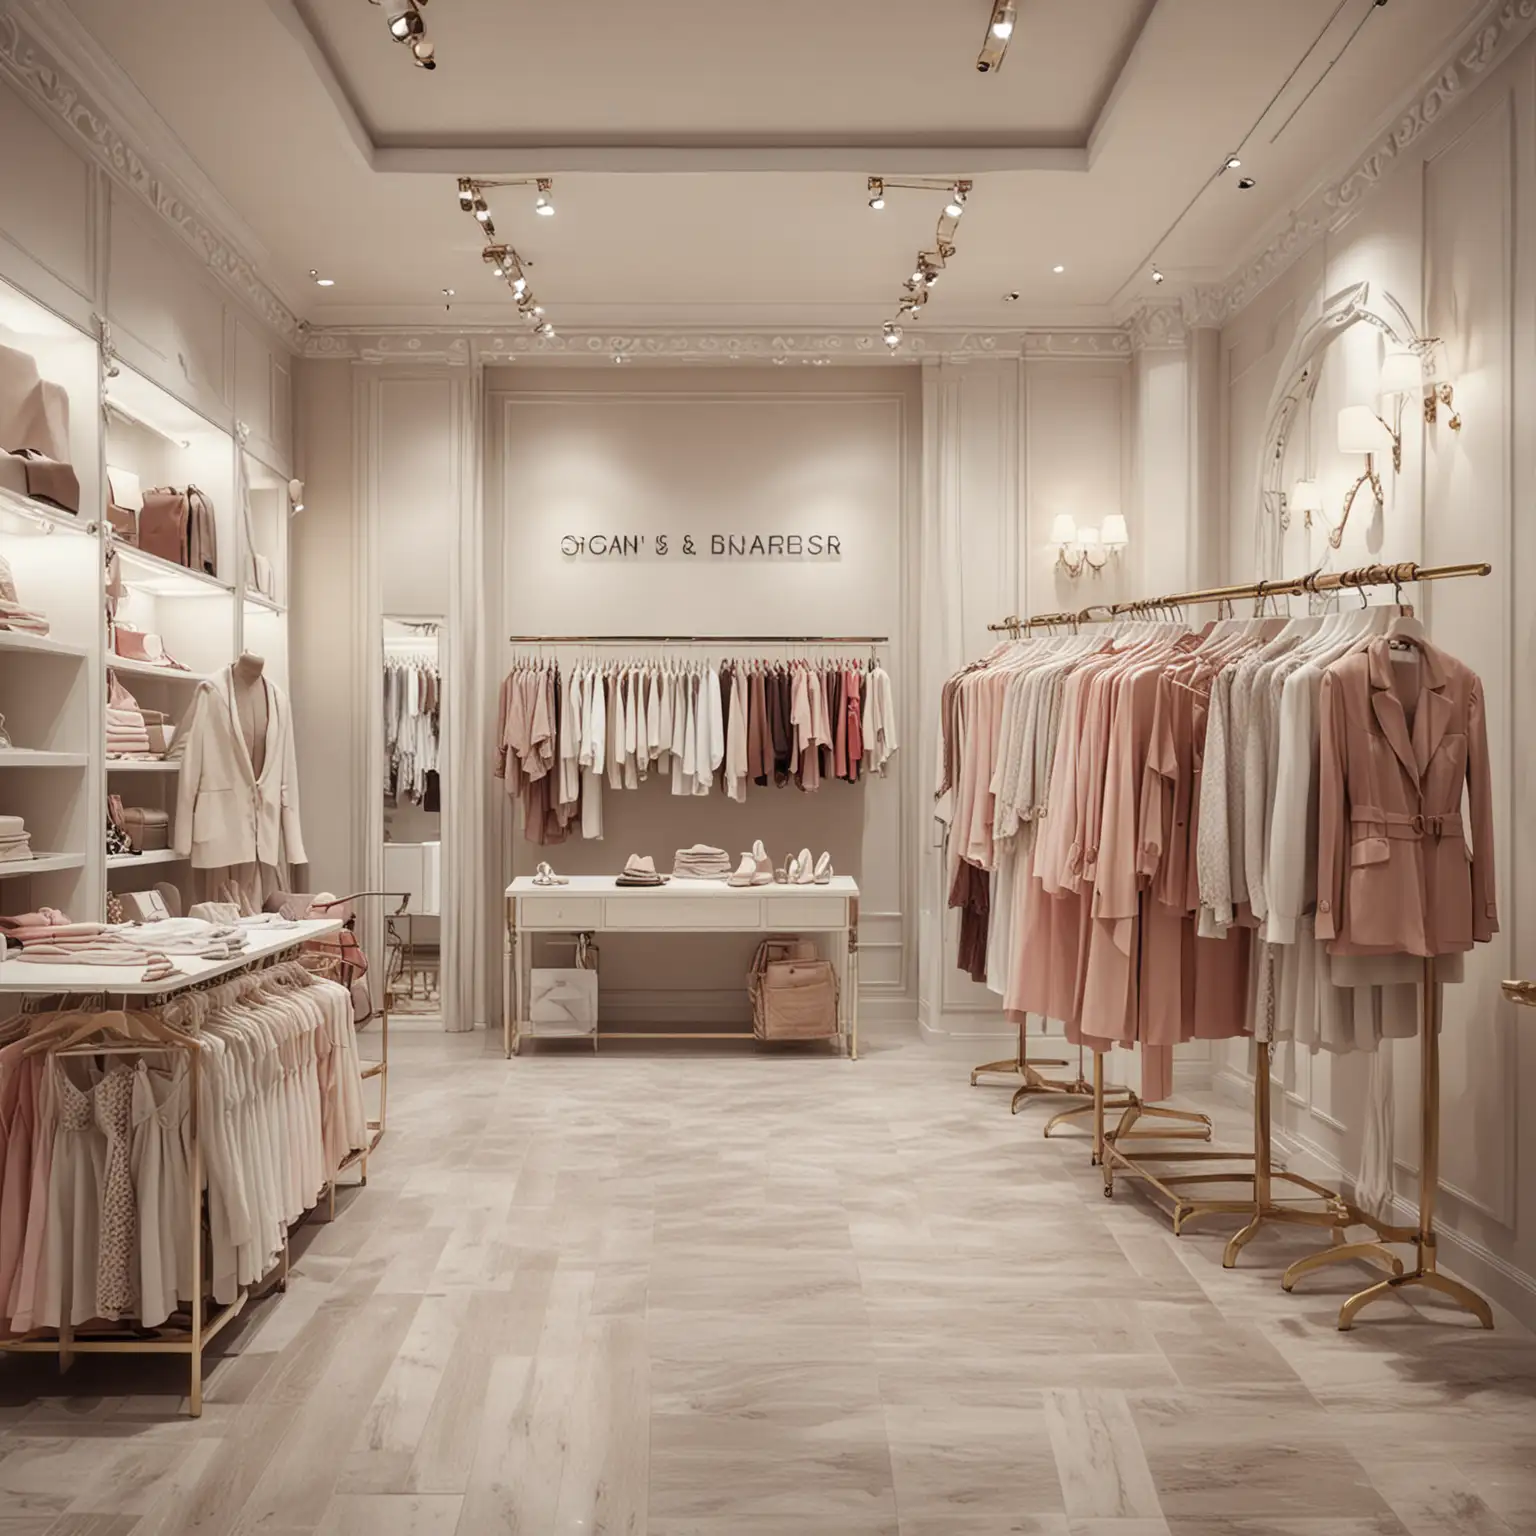 Luxury Female Boutique Interior with Fashionable Clothing